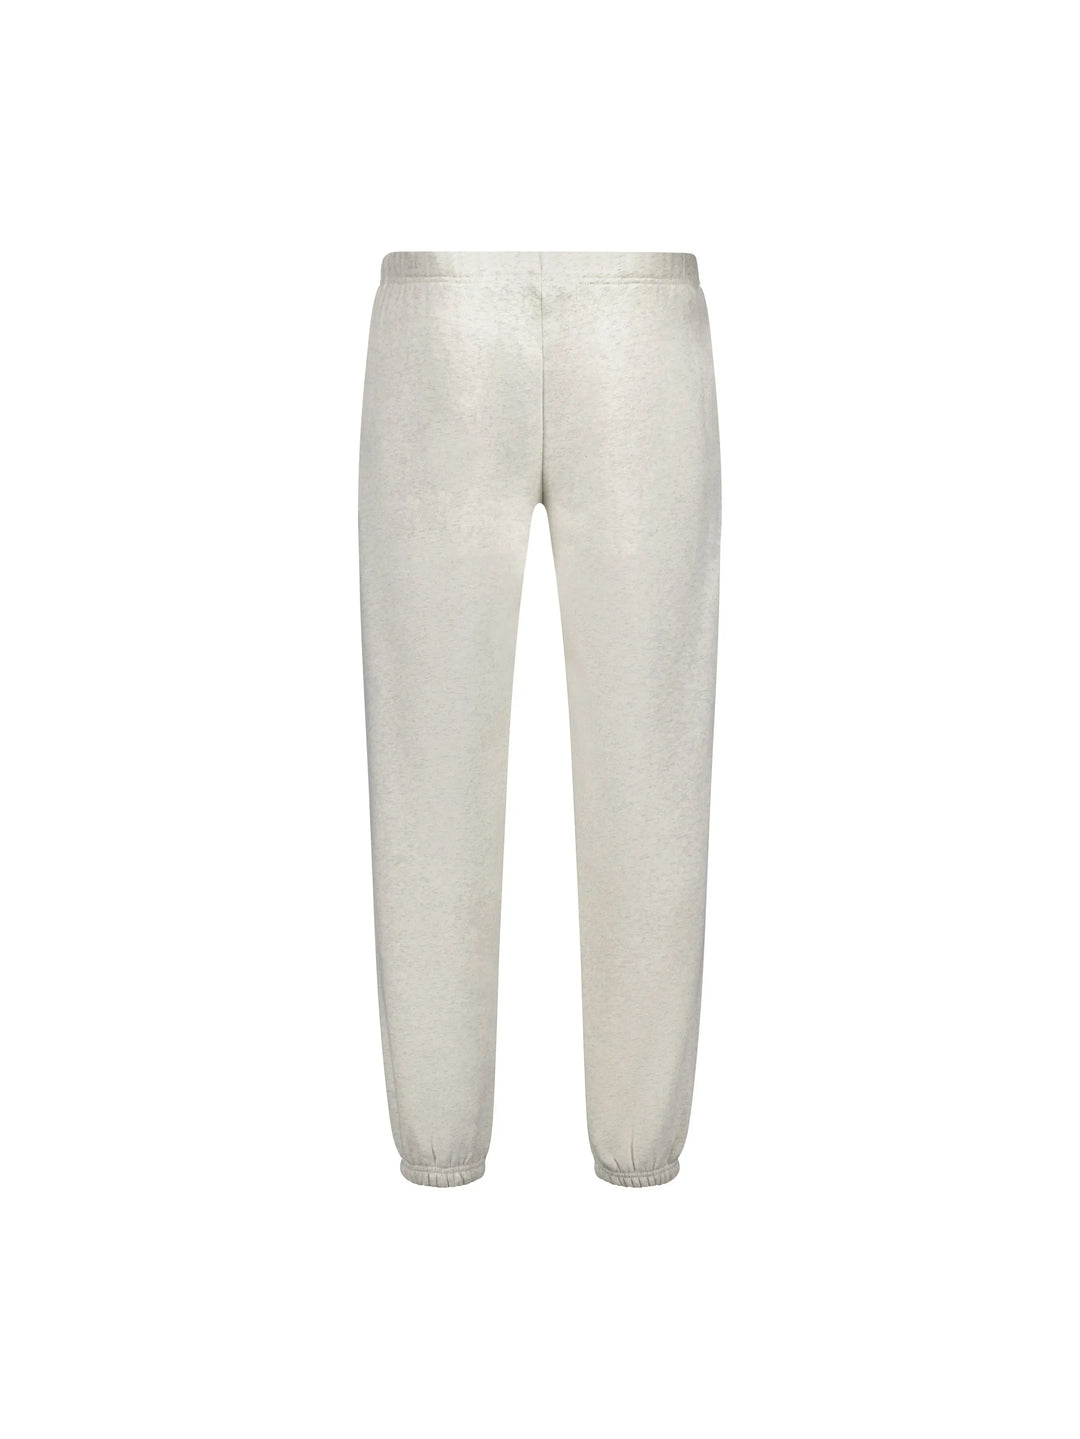 CORE Essential Sweatpants Ecru Grey in Melbourne, Australia - Prior